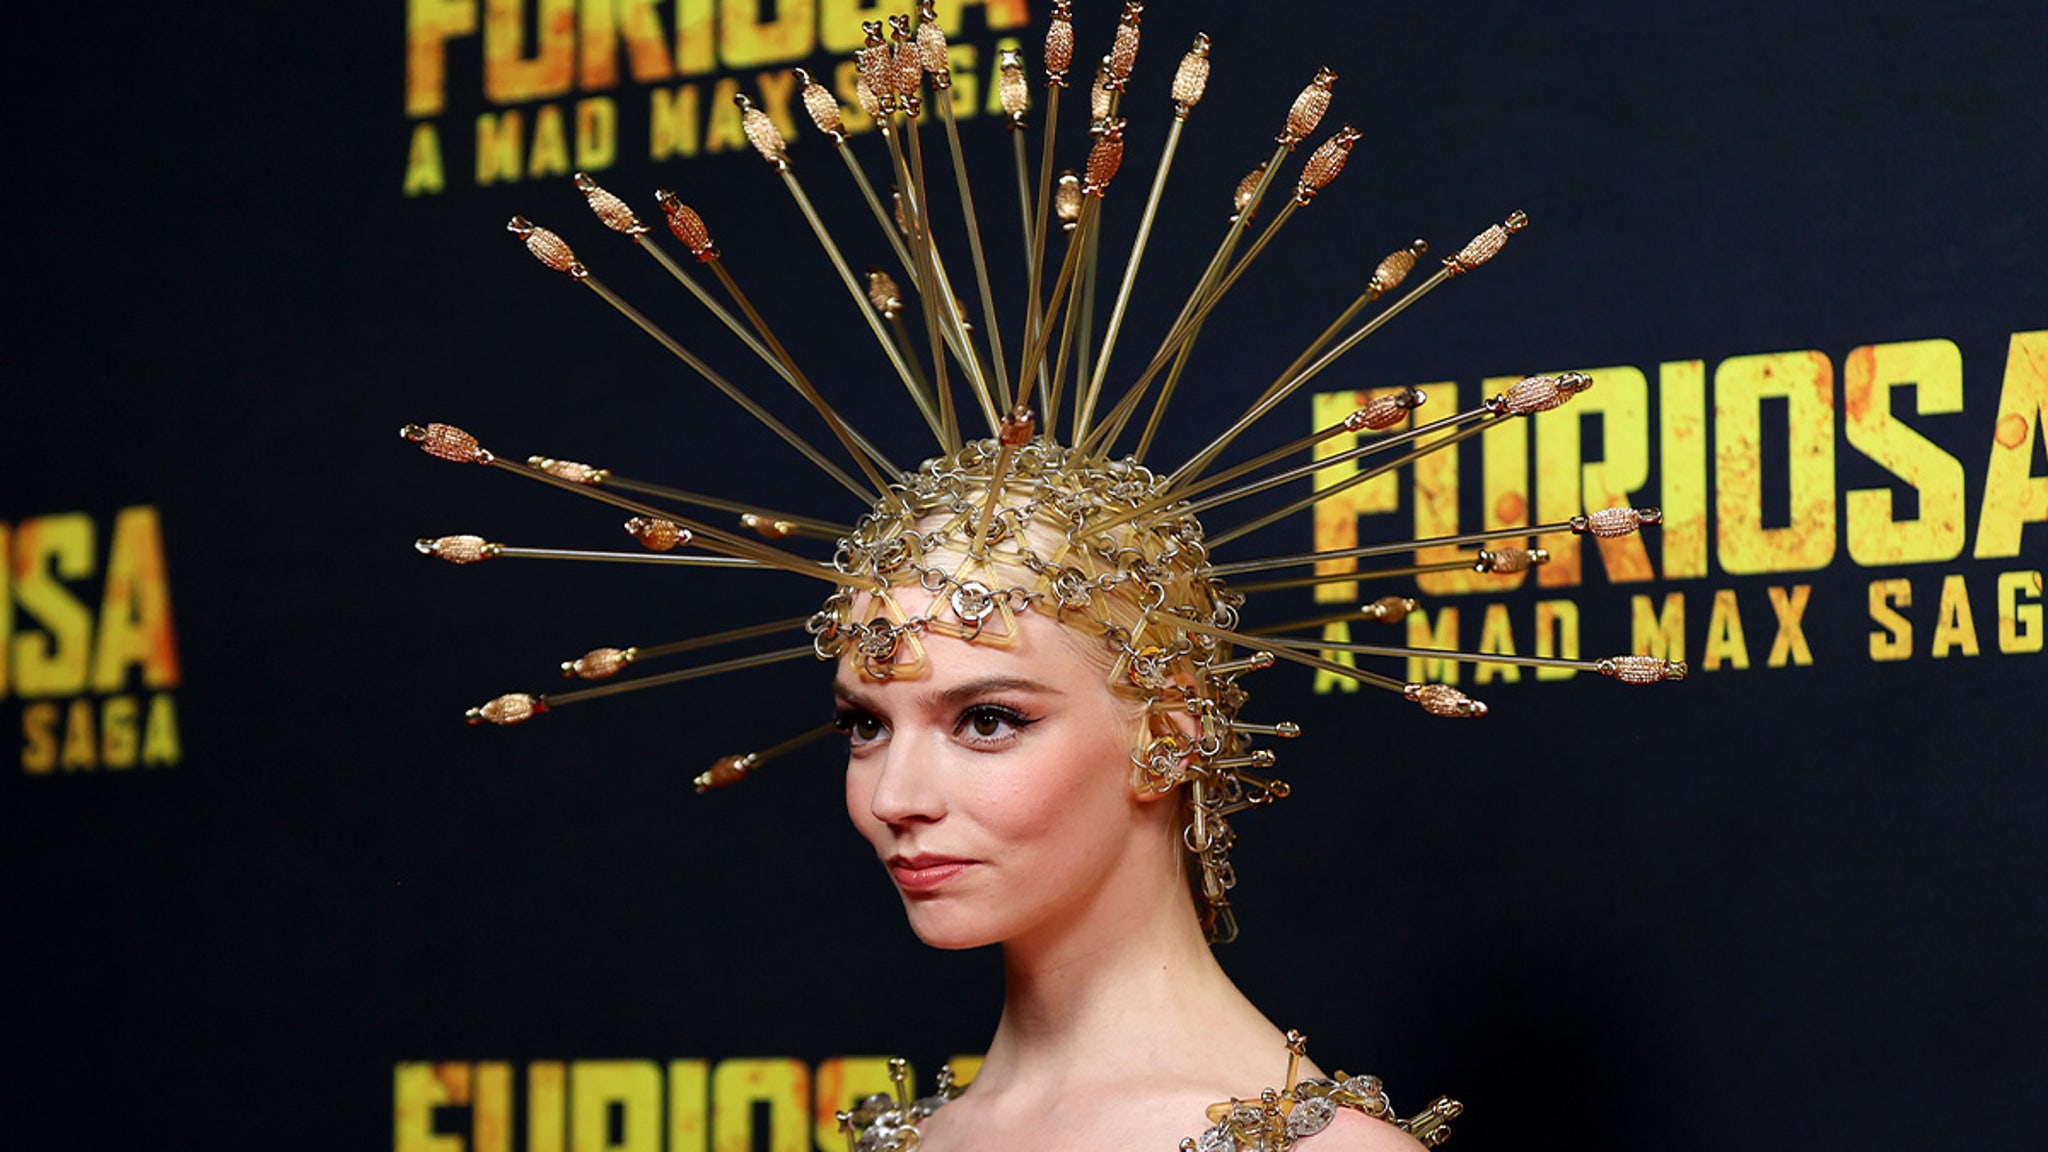 Anya Taylor-Joy Stuns in Striking Sheer Dress Adorned with Spikes at ‘Furiosa’ Premiere